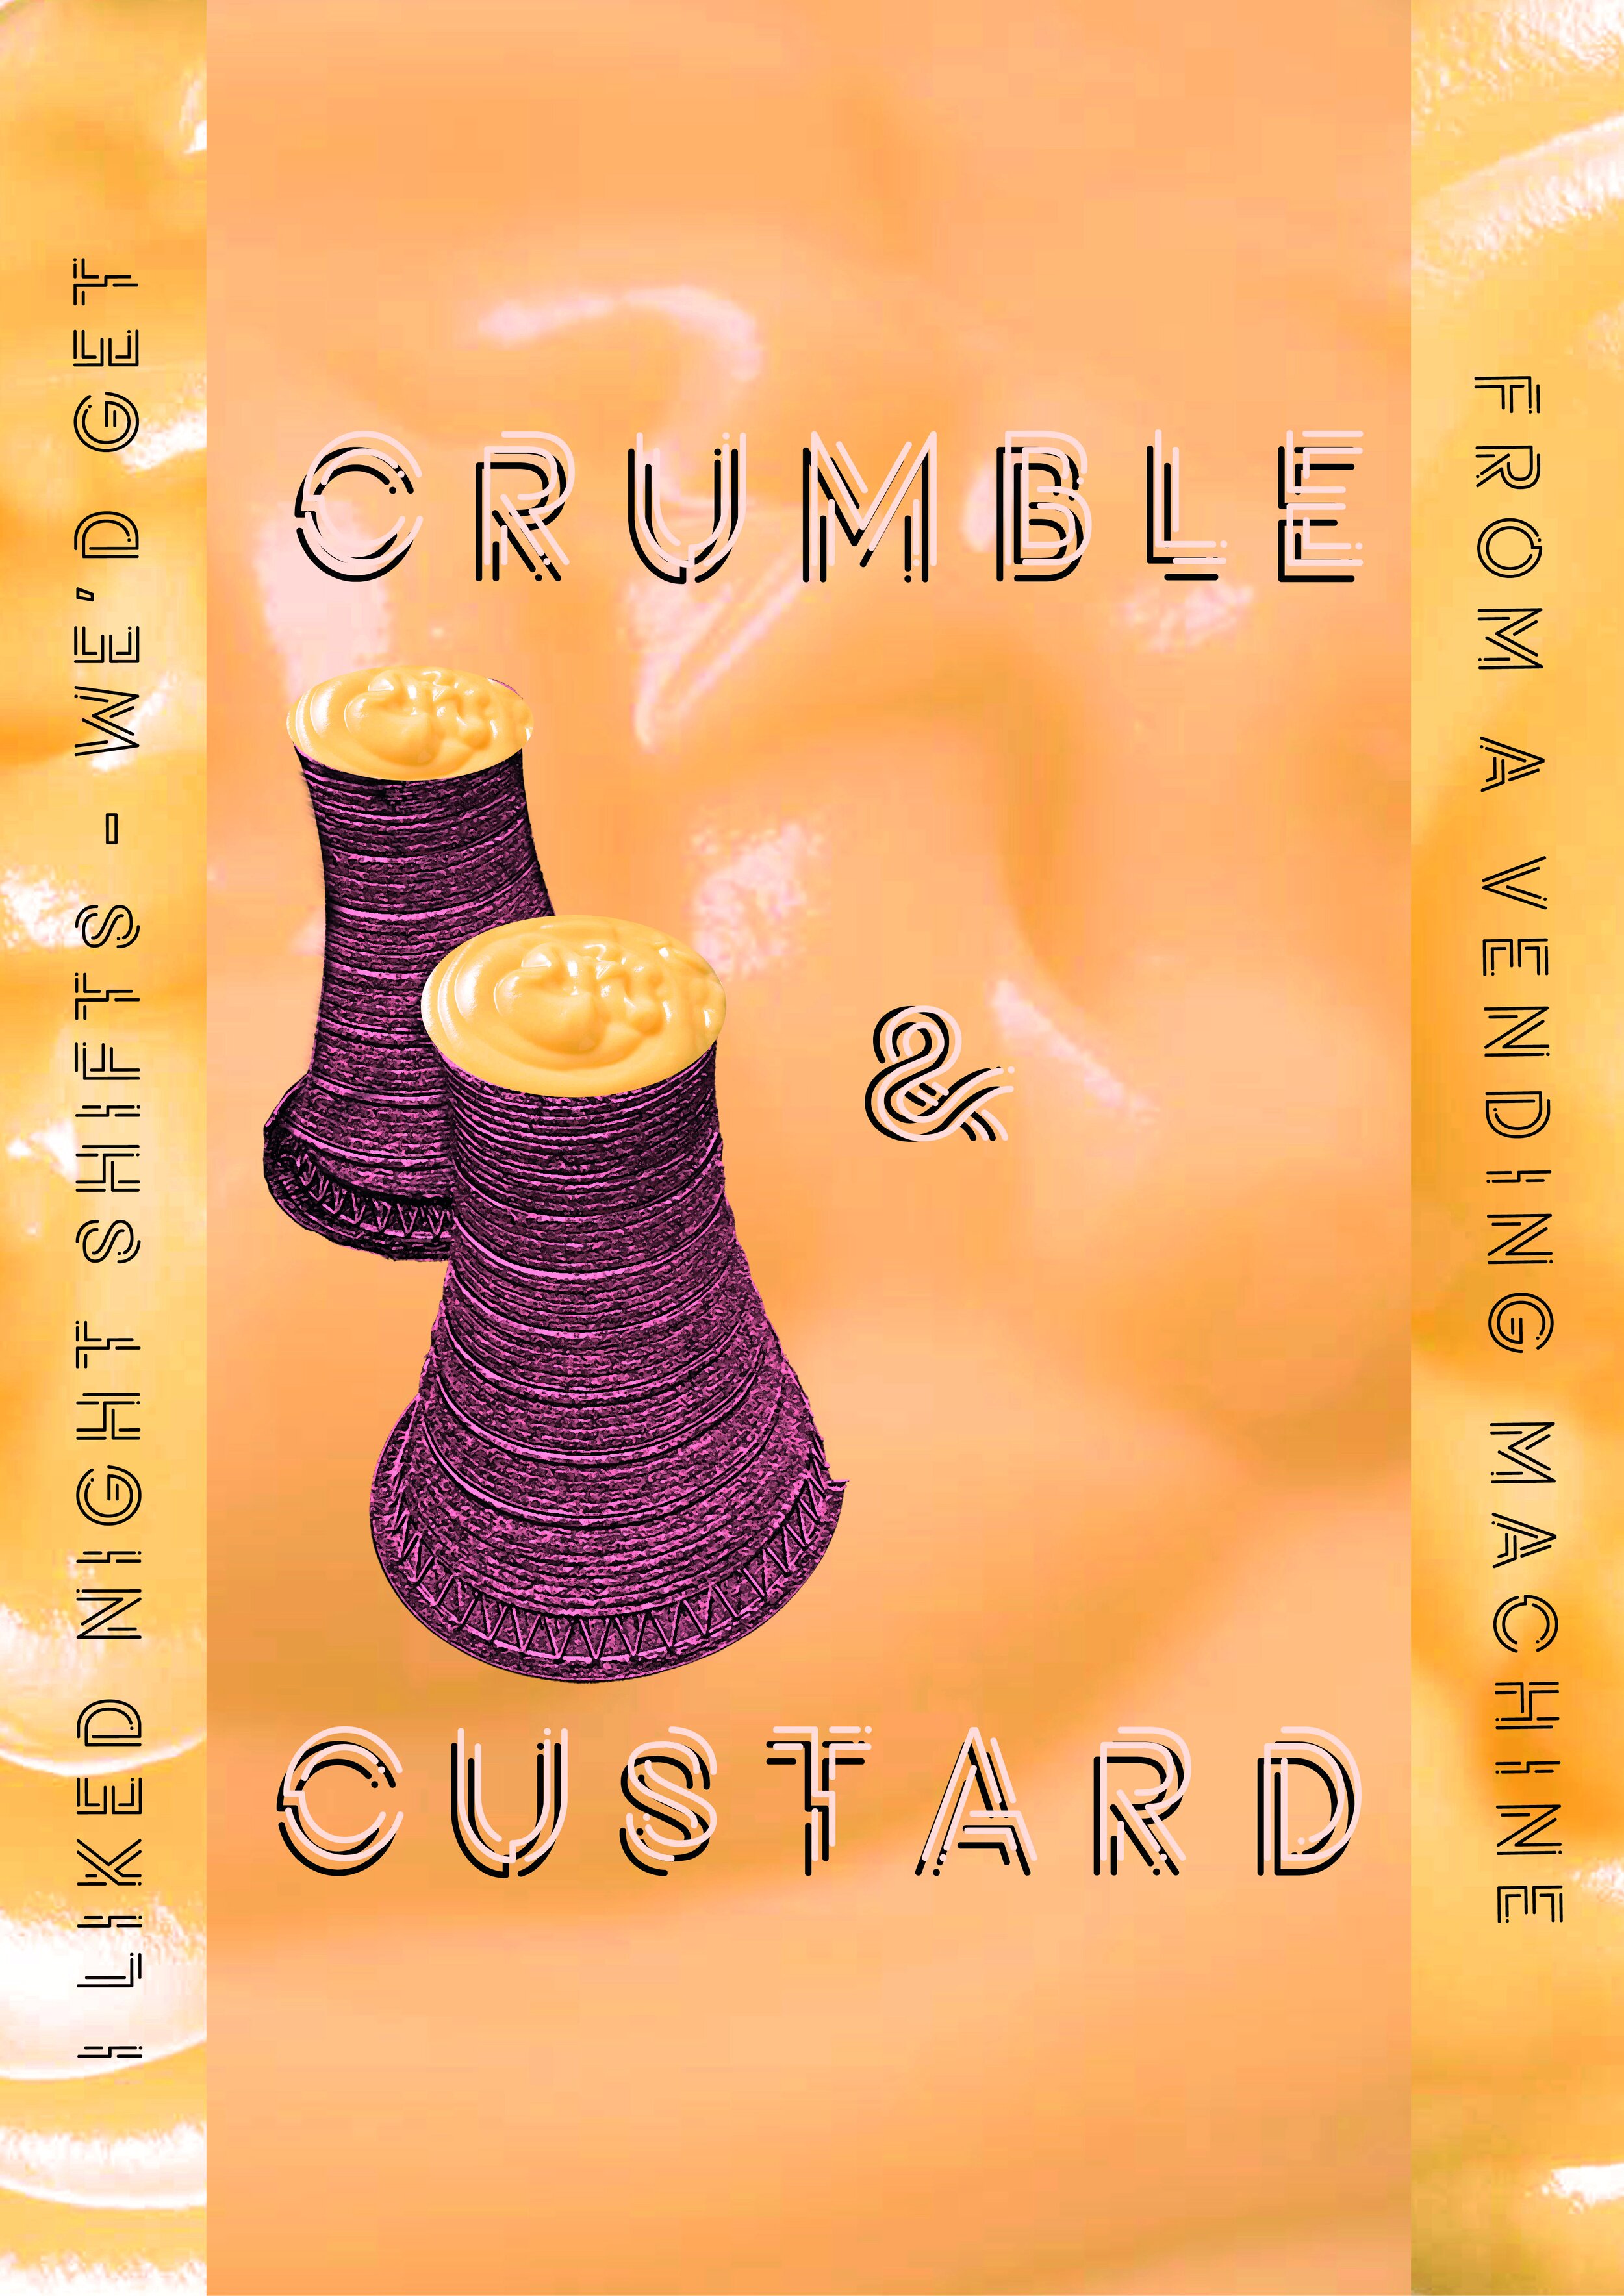 Custard and crumble_Dana Olărescu.jpg